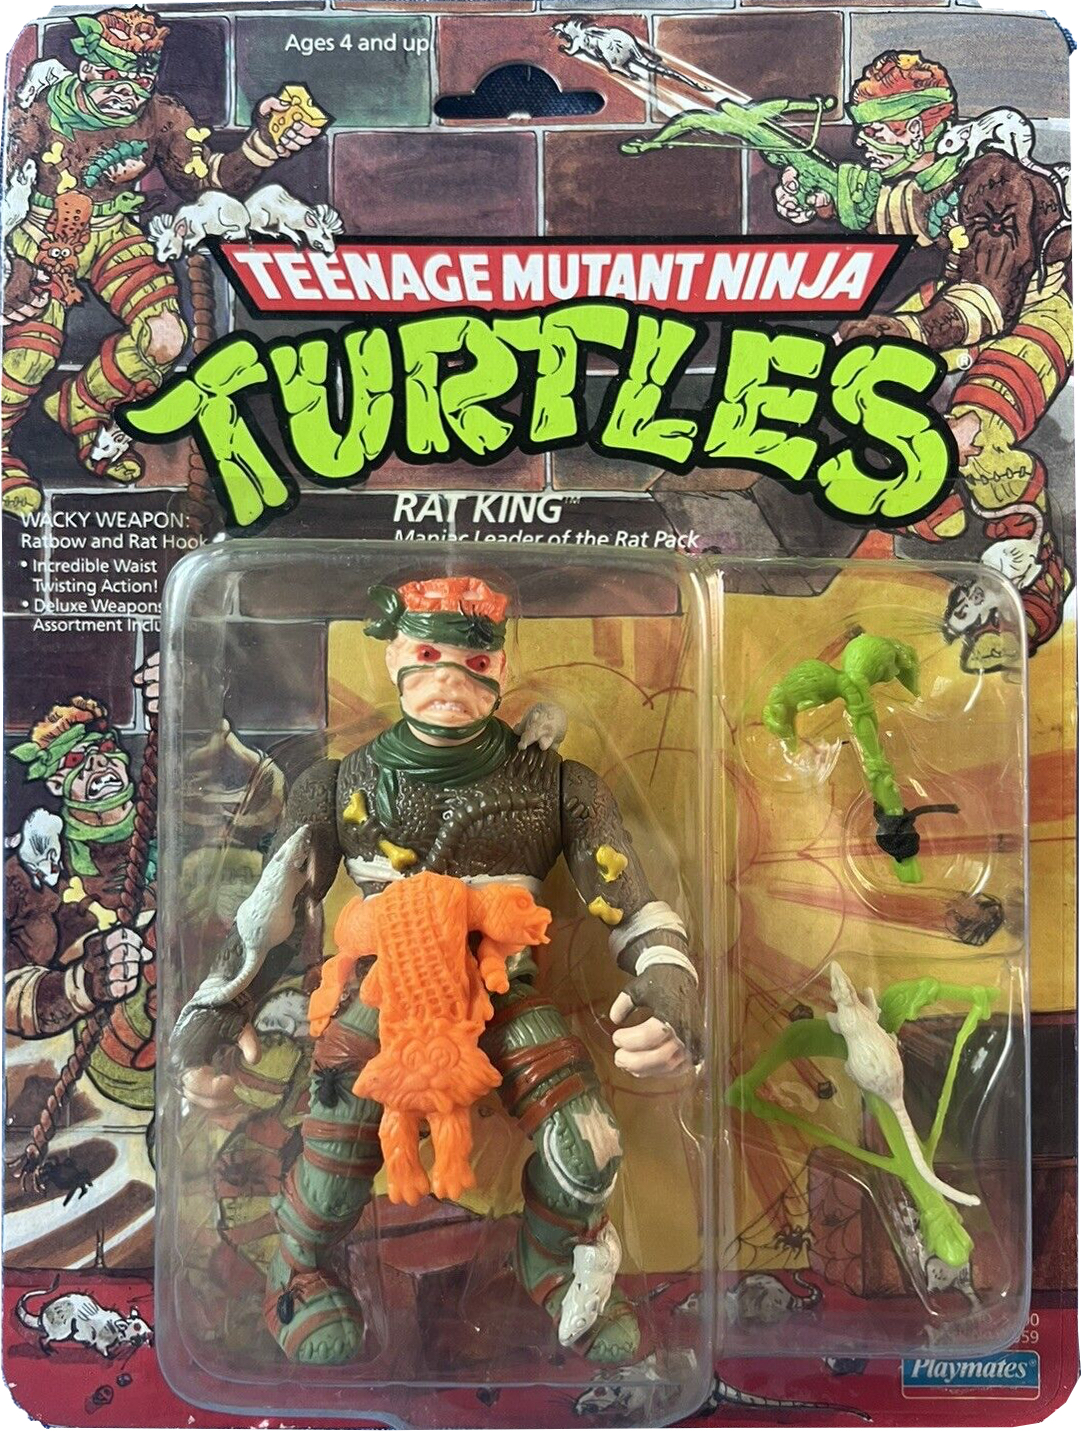 https://www.actionfigure411.com/teenage-mutant-ninja-turtles/images/rat-king-4862.jpg